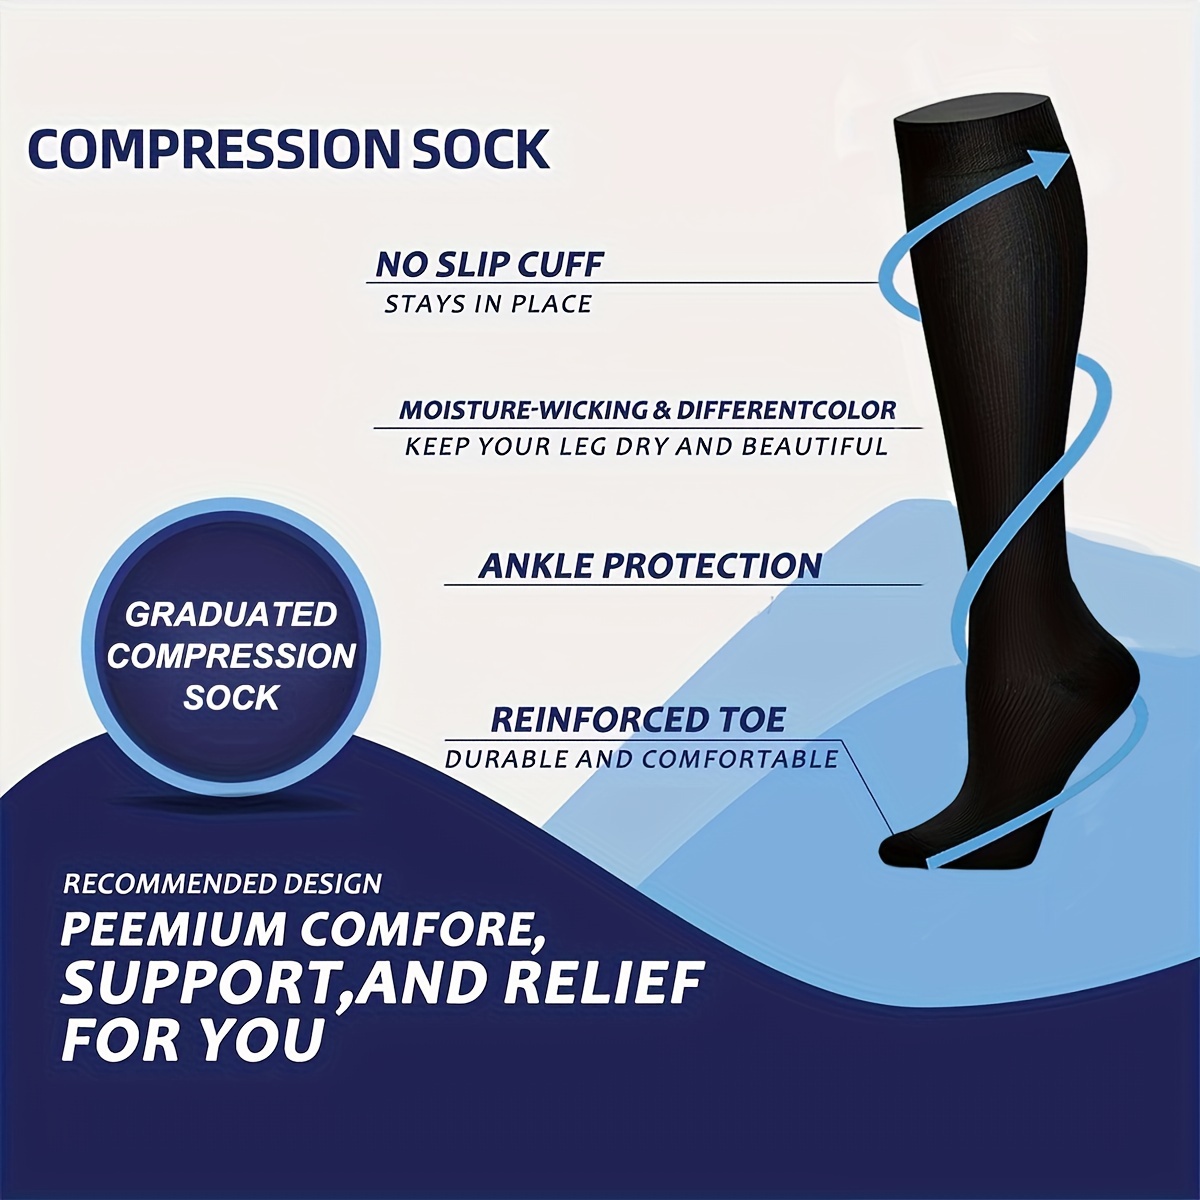 Graduated Compression Socks vs. Regular Compression Socks